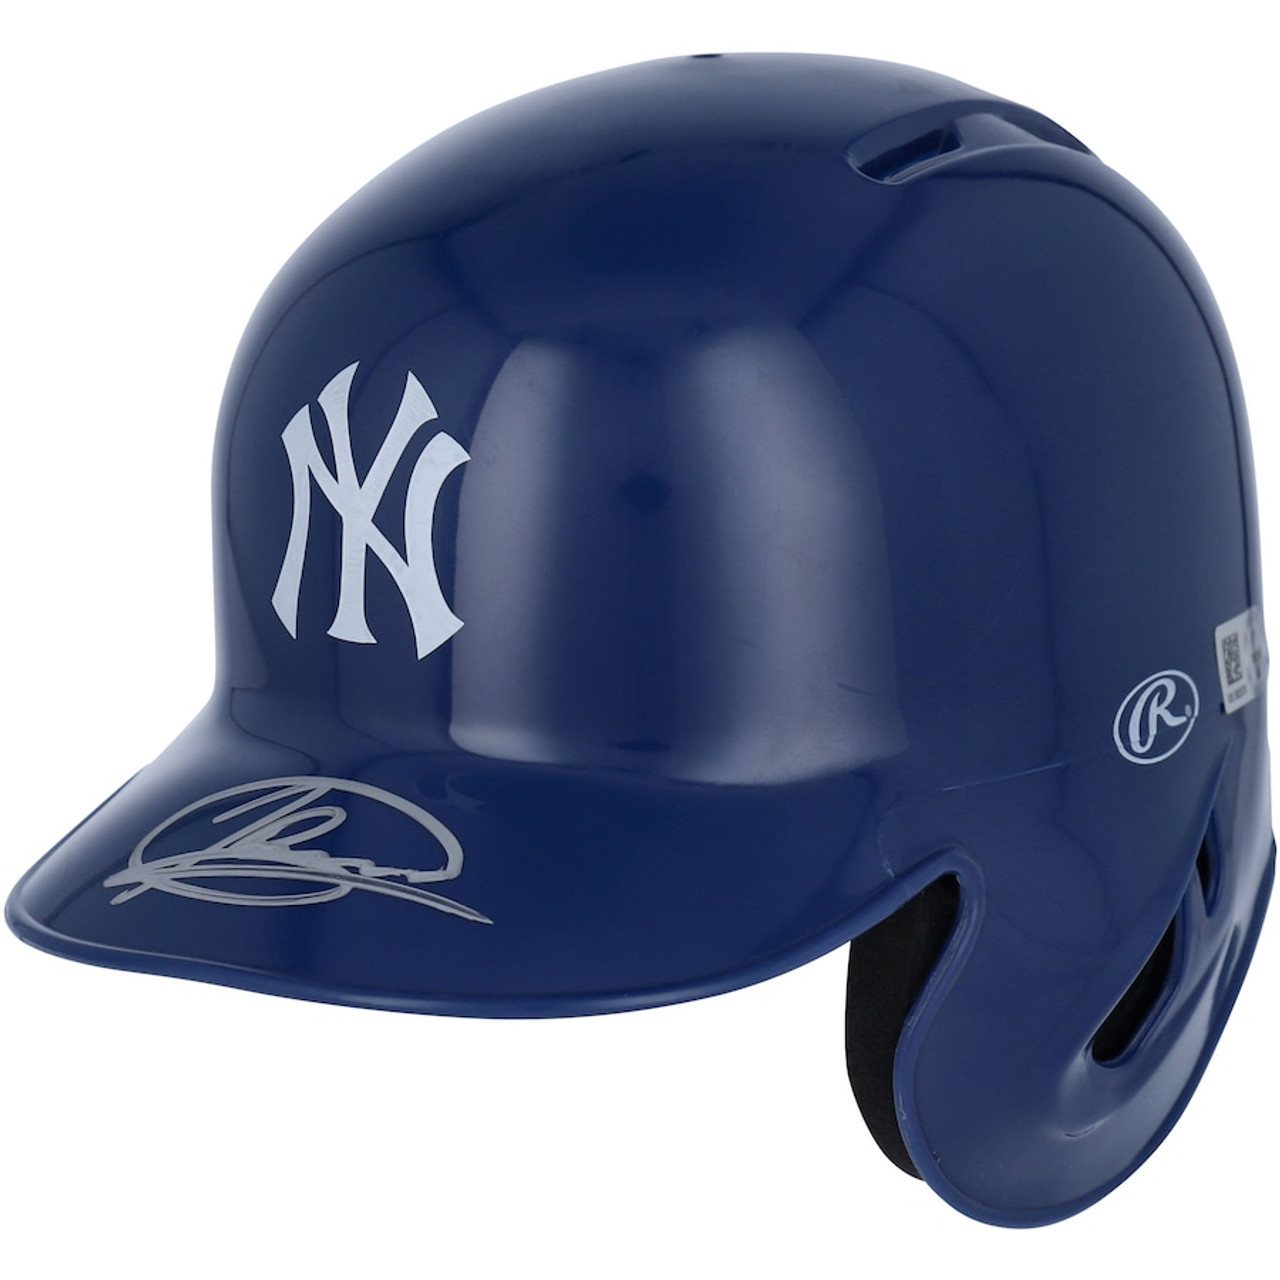 JASSON DOMINGUEZ Autographed New York Yankees Mini Batting Helmet FANATICS  - Game Day Legends